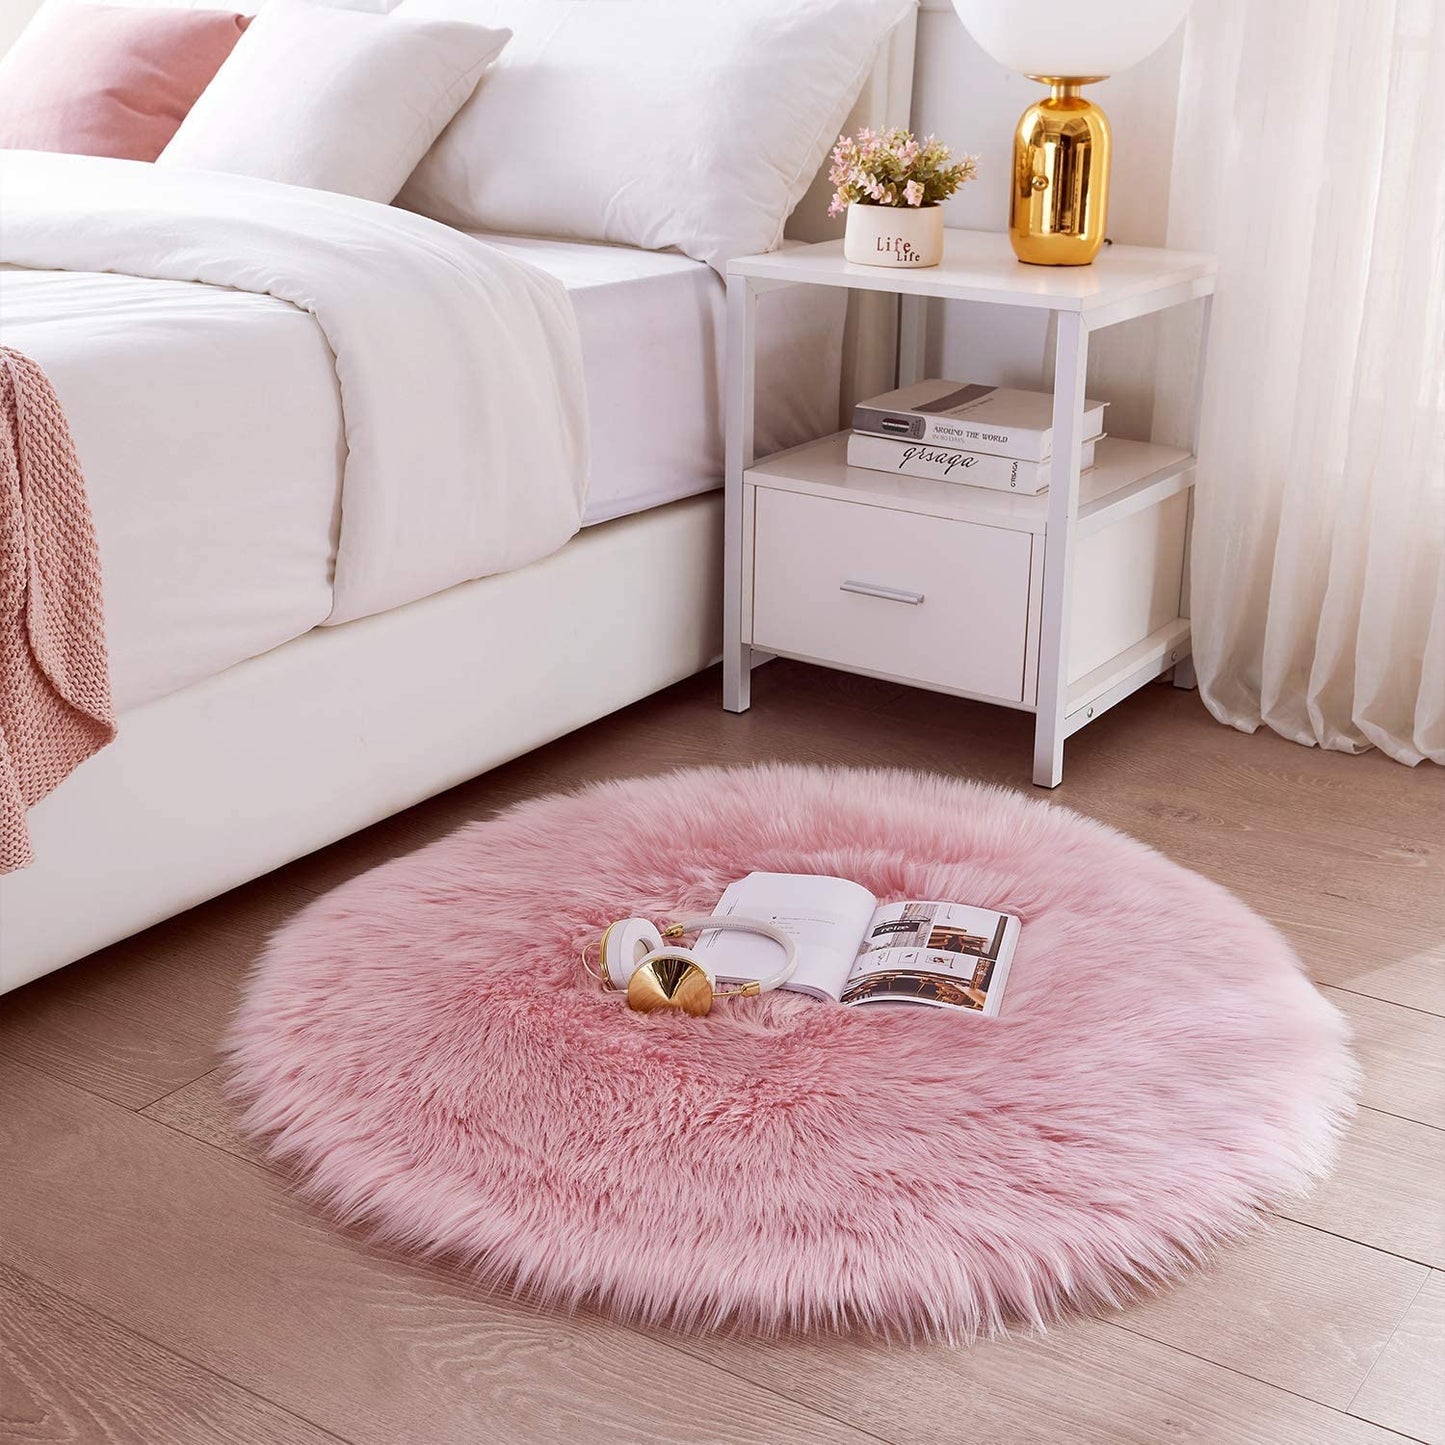 Floor Mats: Circular Carpet for Bedroom Soft Circle Kids Play Mat (30x30, Black)